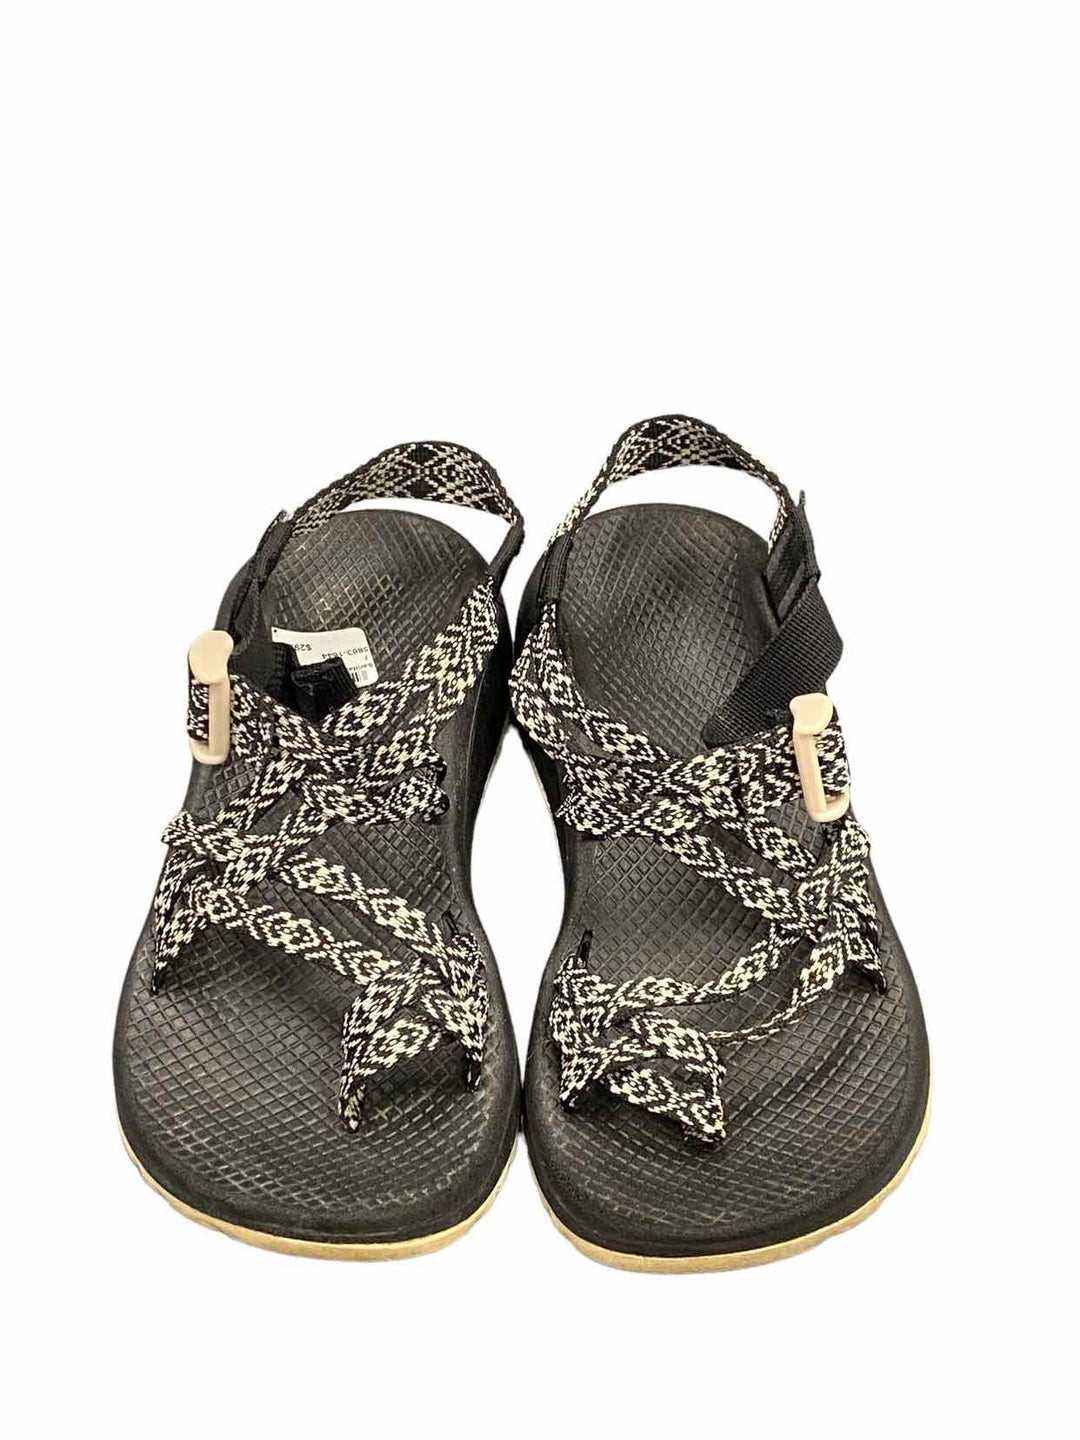 Chaco Shoe Size 7 Black White Sandals